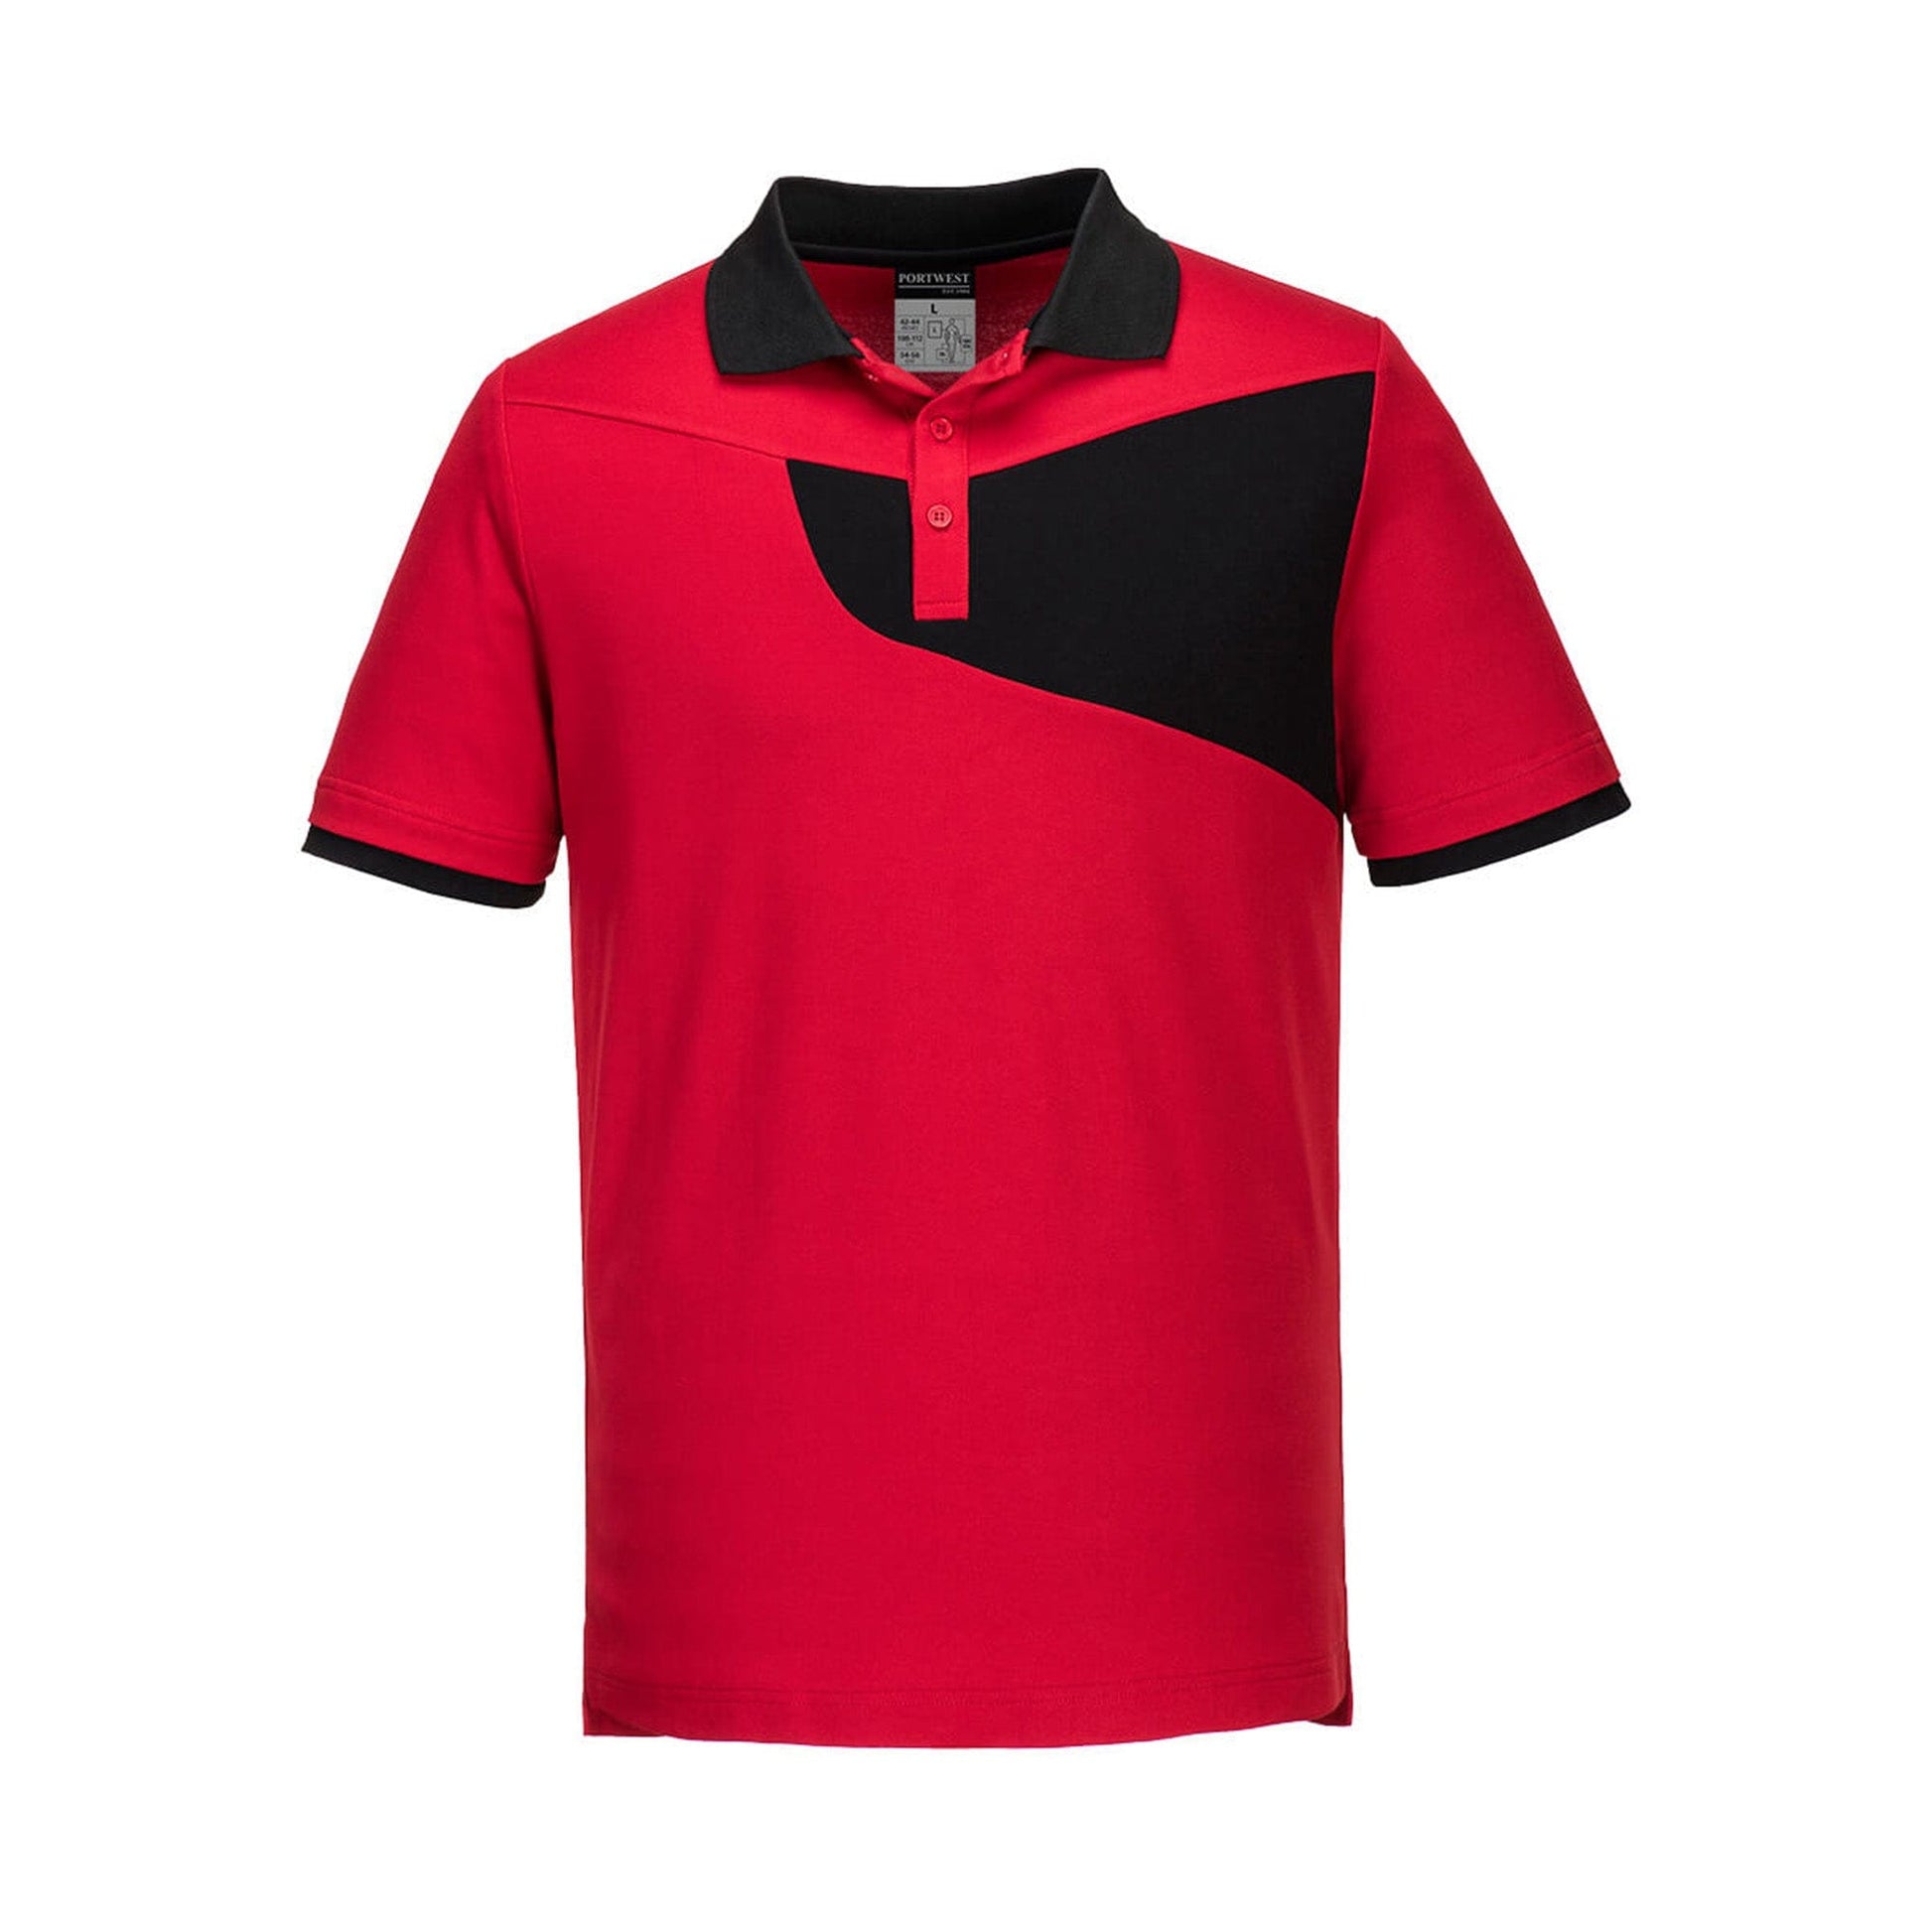 Portwest PW2 Cotton Comfort Polo Shirt PW210 Red/Black